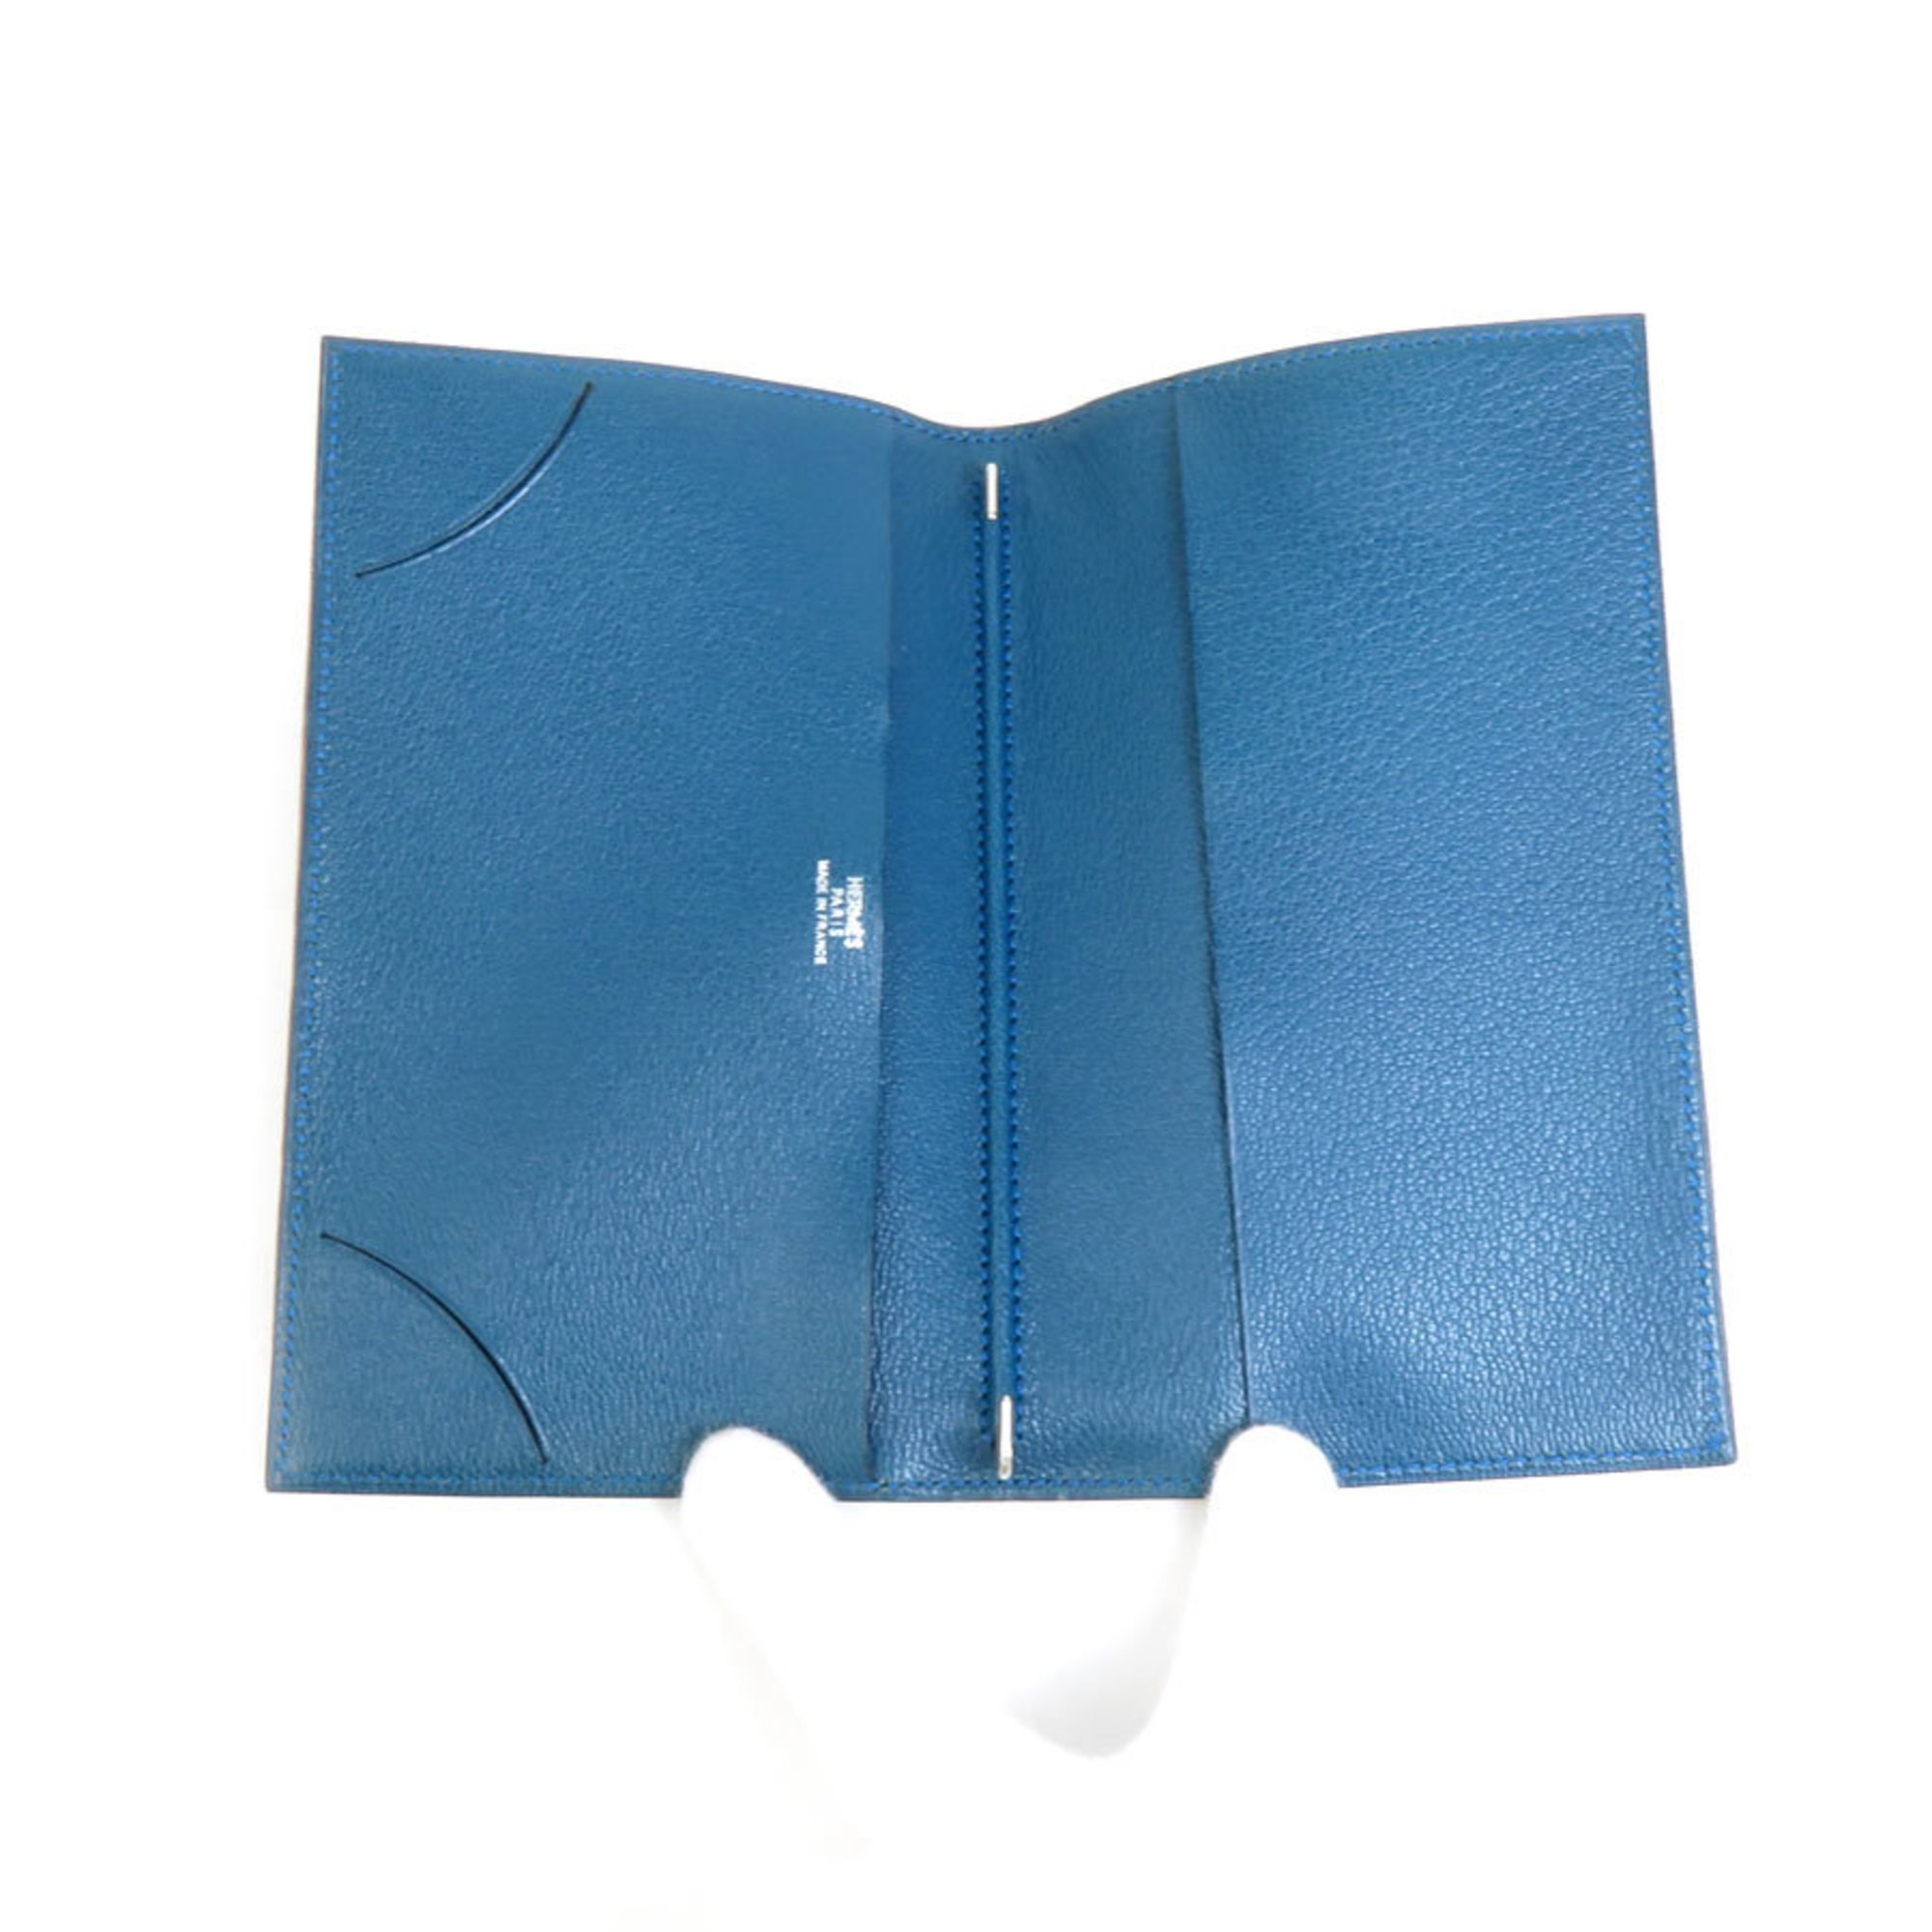 Hermes HERMES Notebook Cover Suede/Leather Gray/Dark Blue Unisex